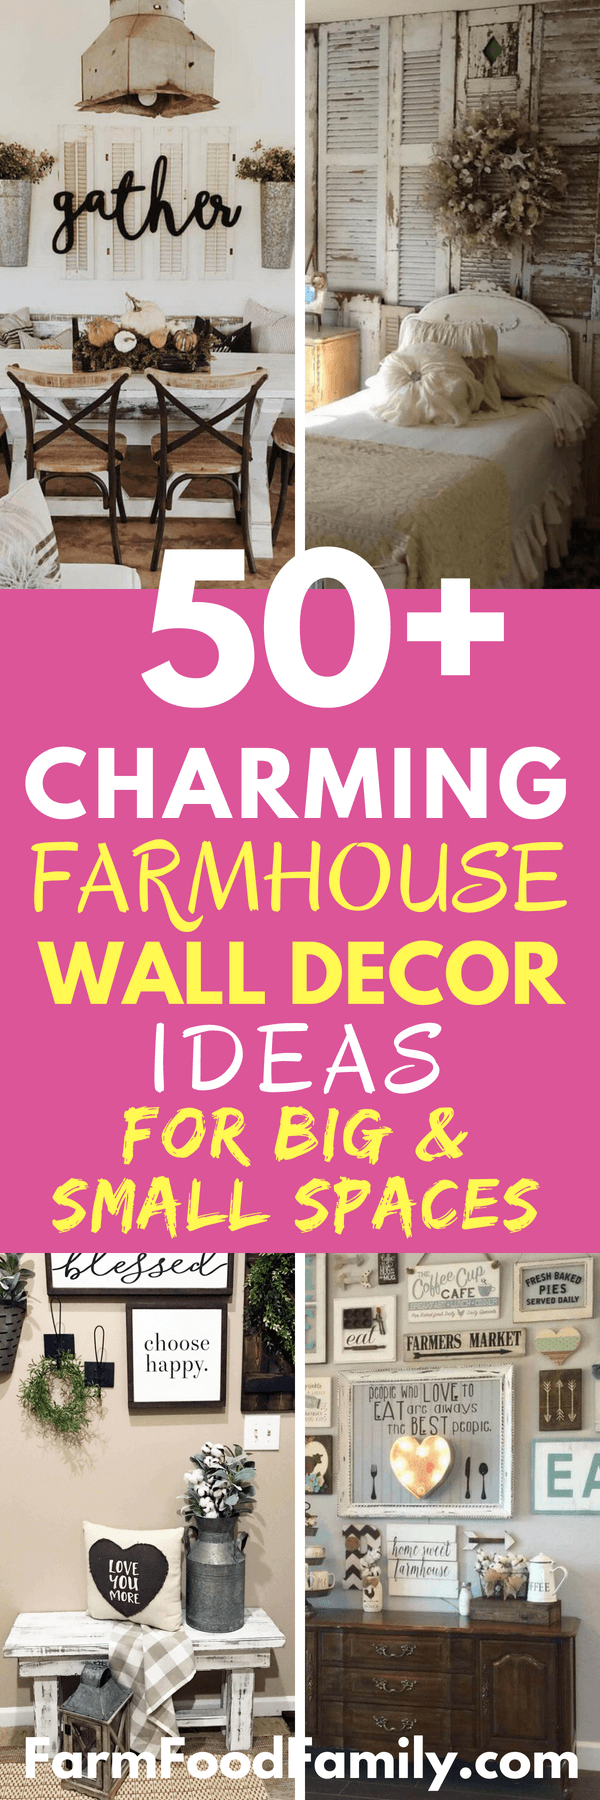 Checkout 50+ Charming Farmhouse Wall Decor Ideas #homedecor #walldecor #farmfoodfamily